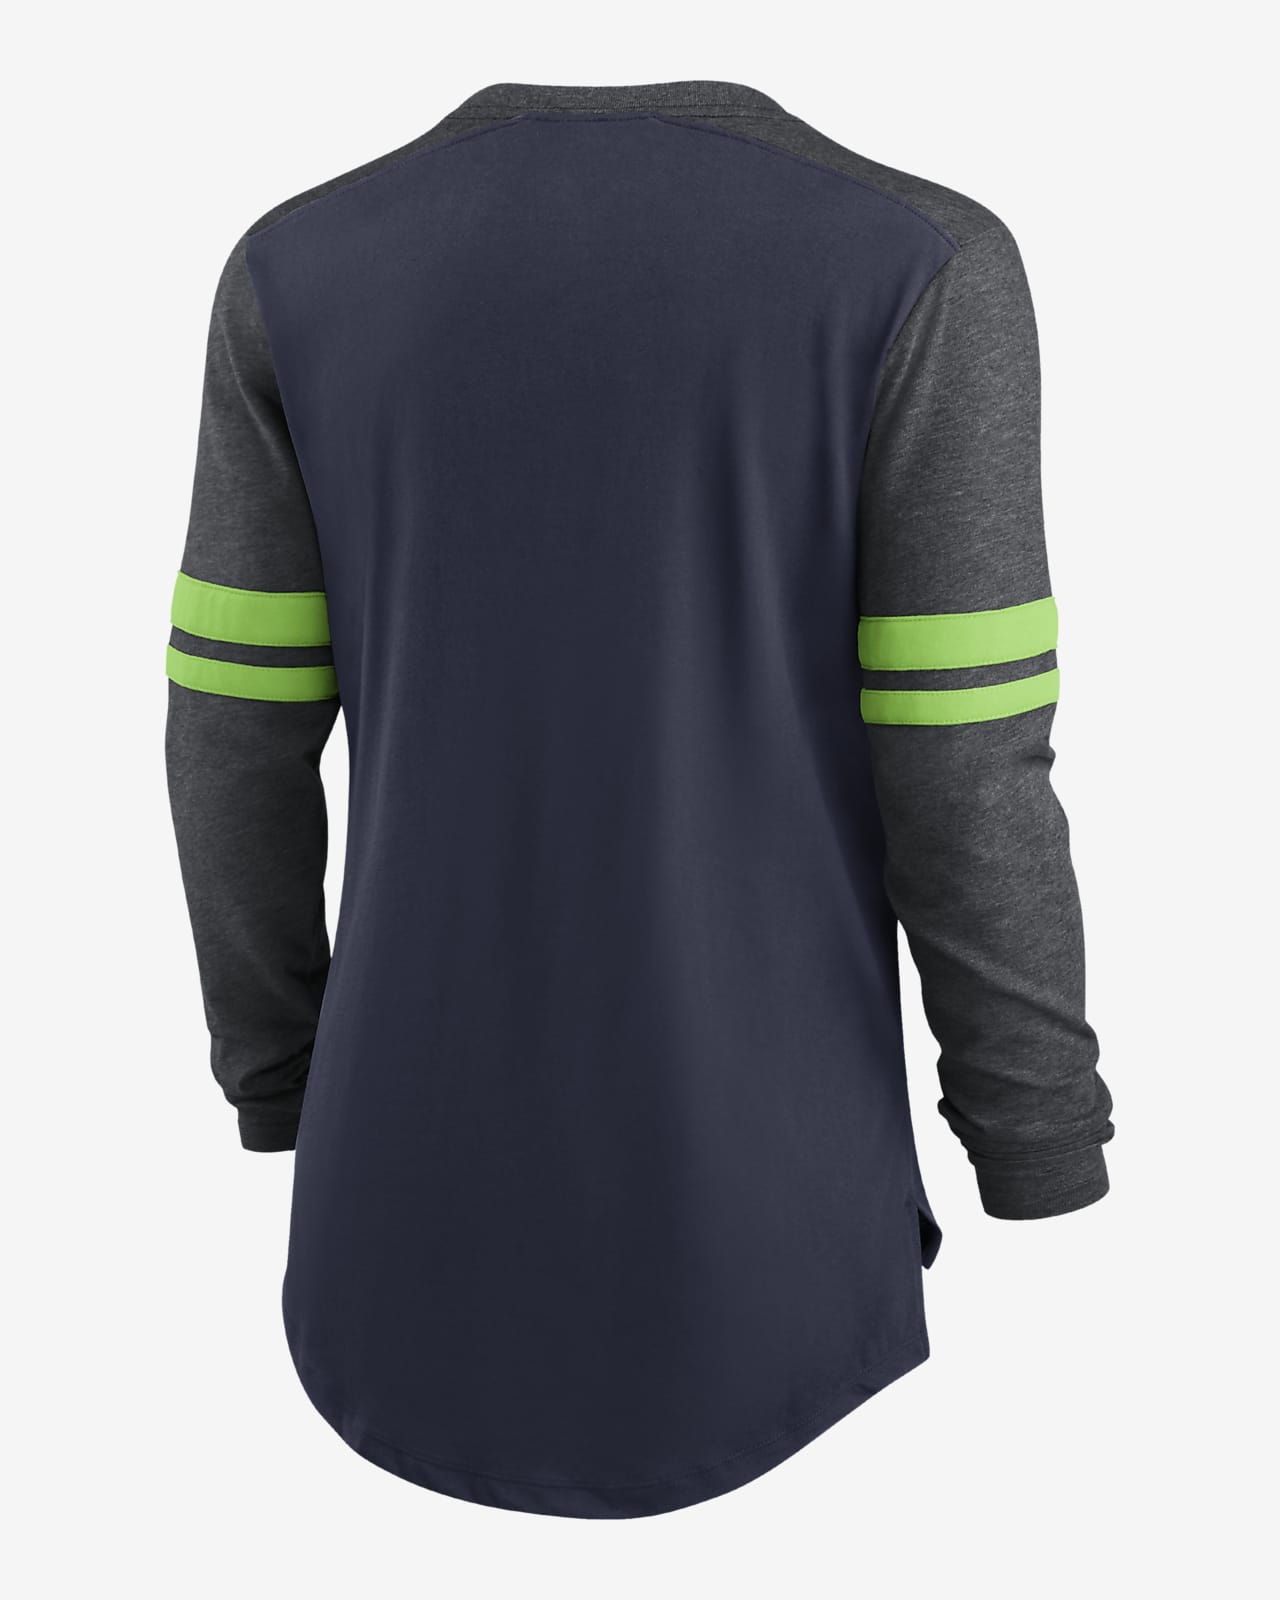 seahawks green long sleeve shirt